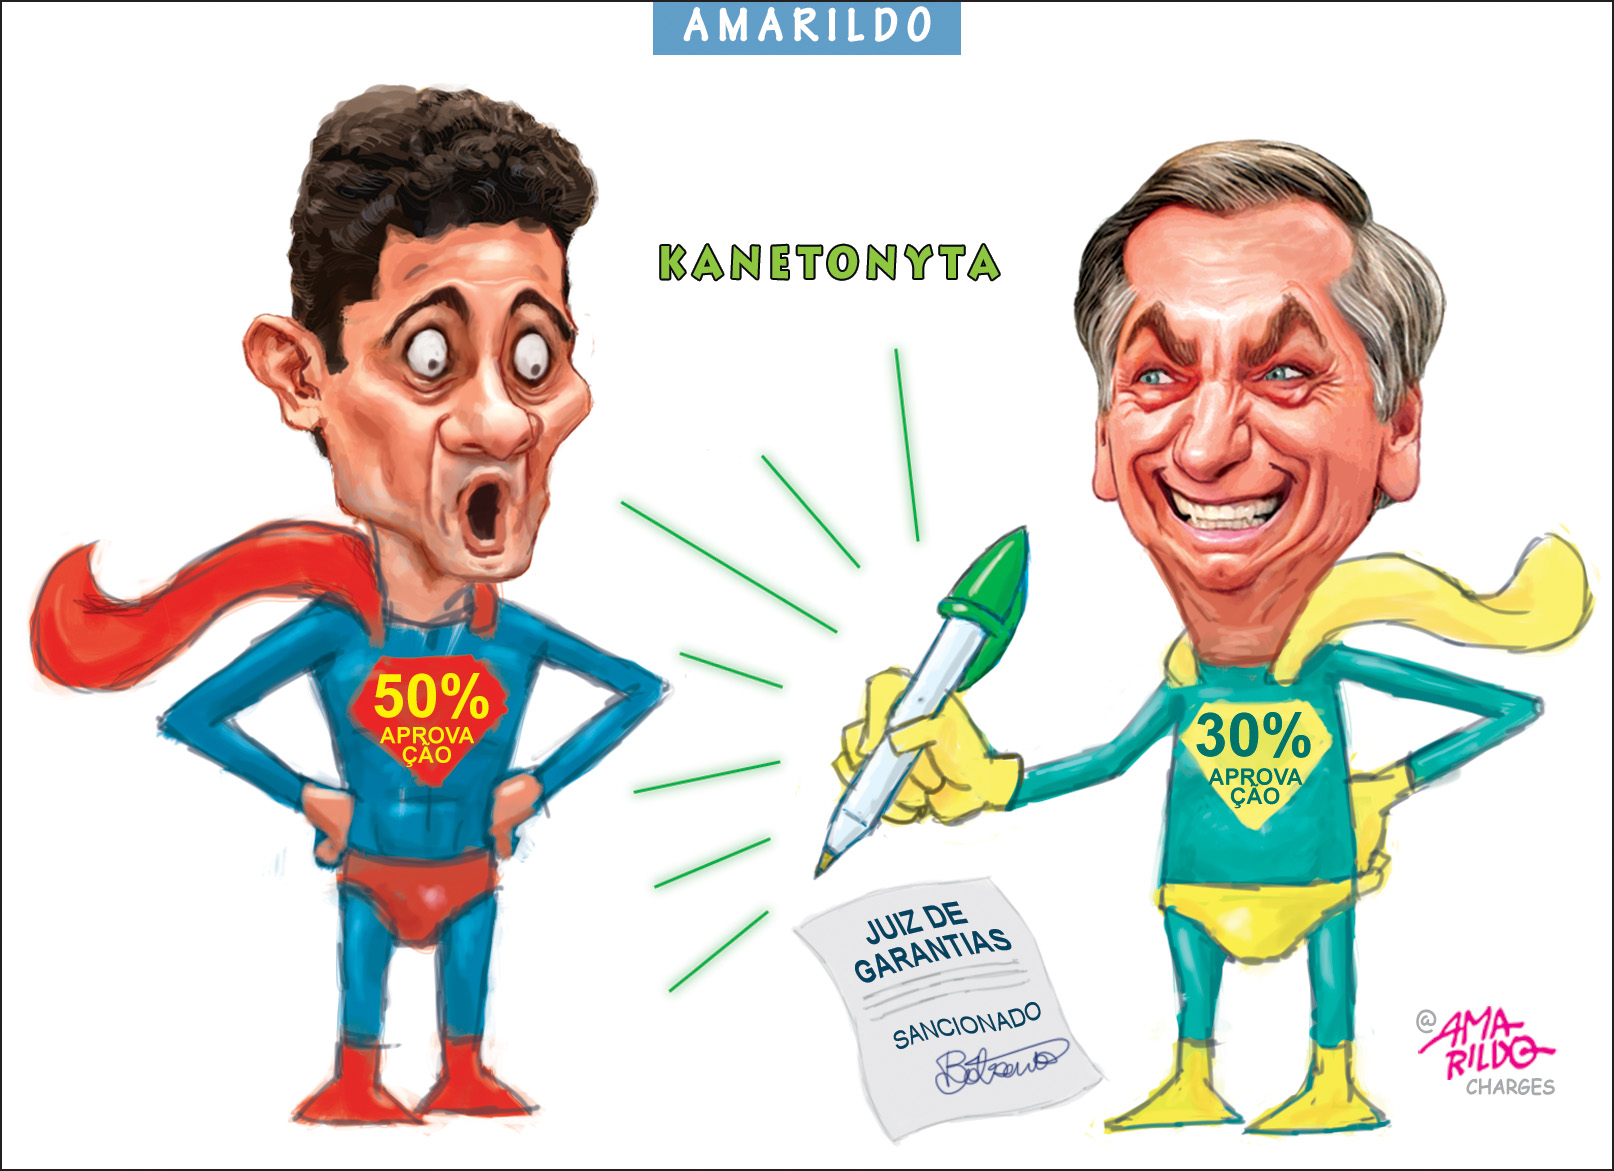 Na charge do Amarildo: Super Moro x Kanetonyta | A Gazeta